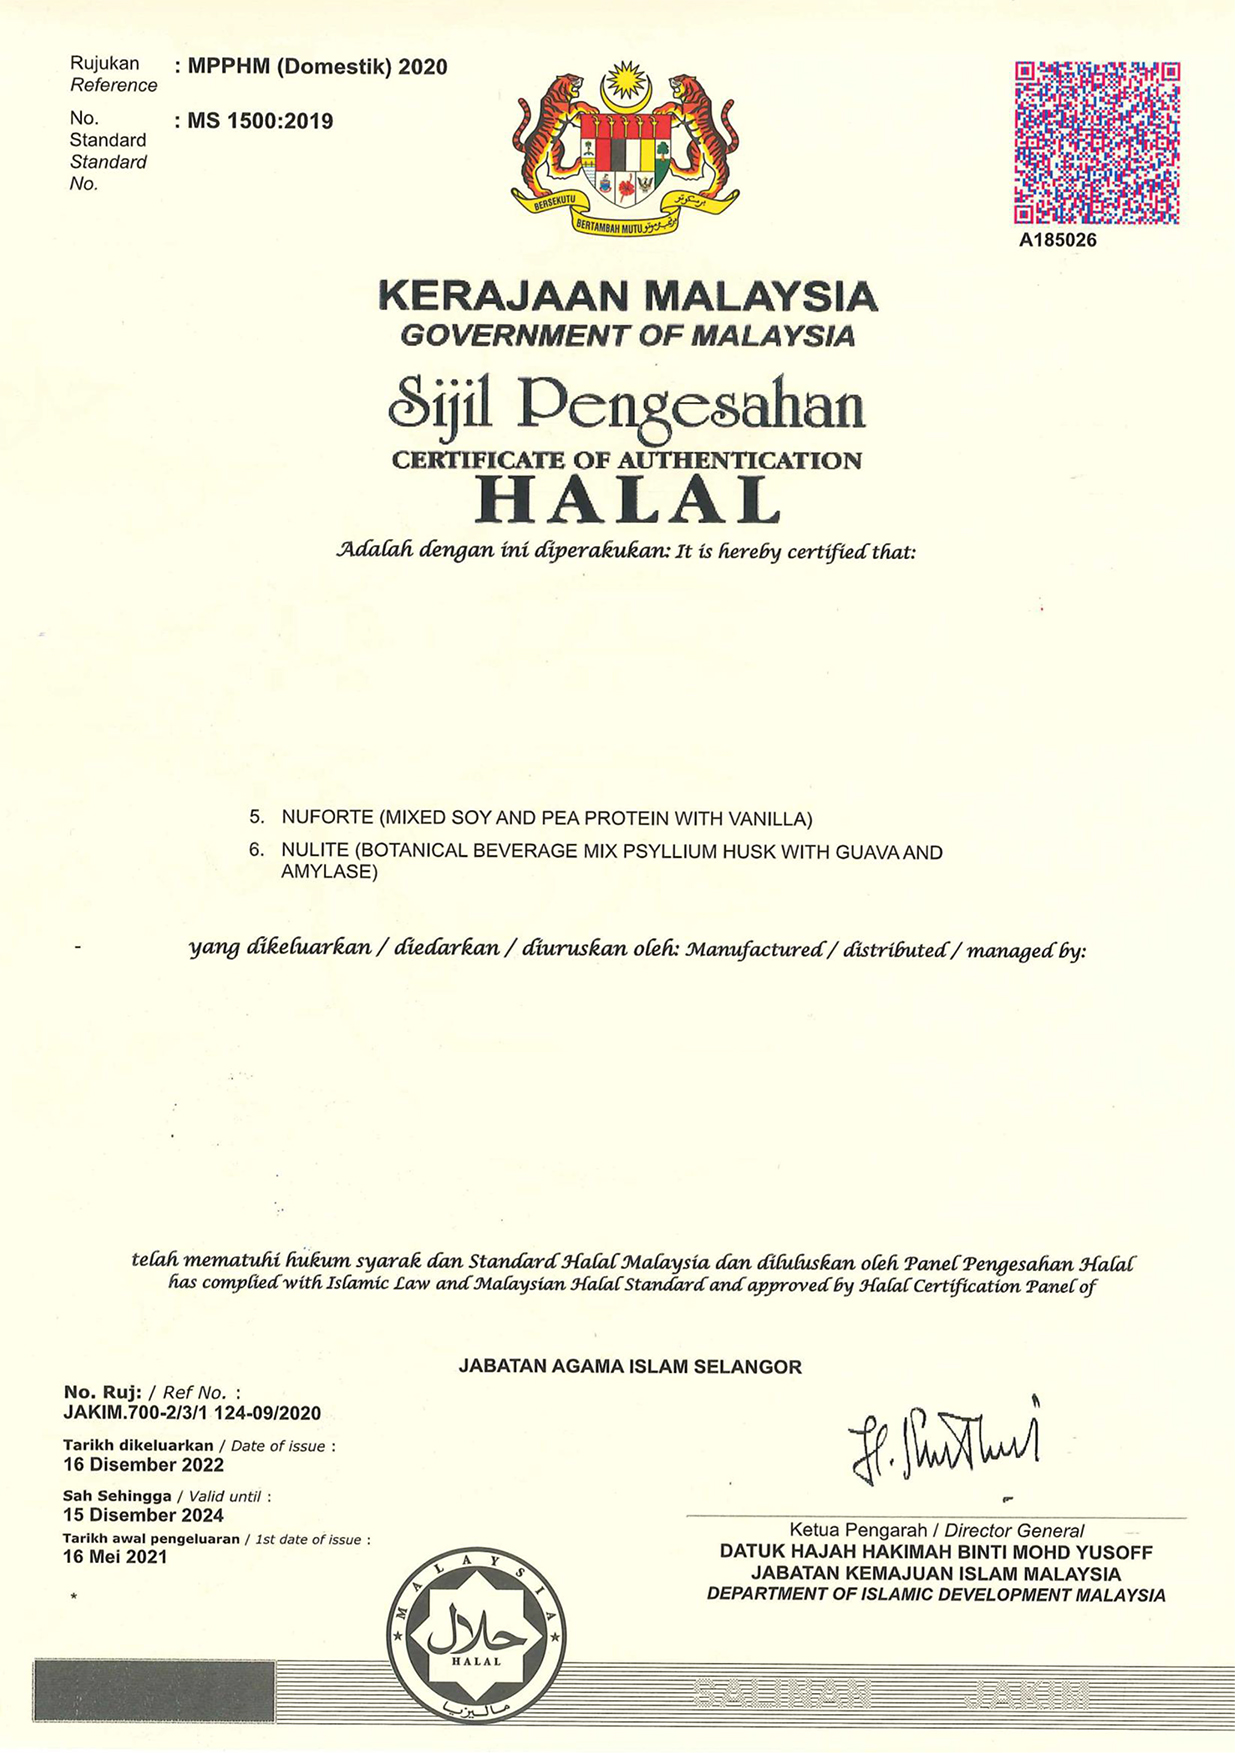 IIQ Plus Halal Certificate